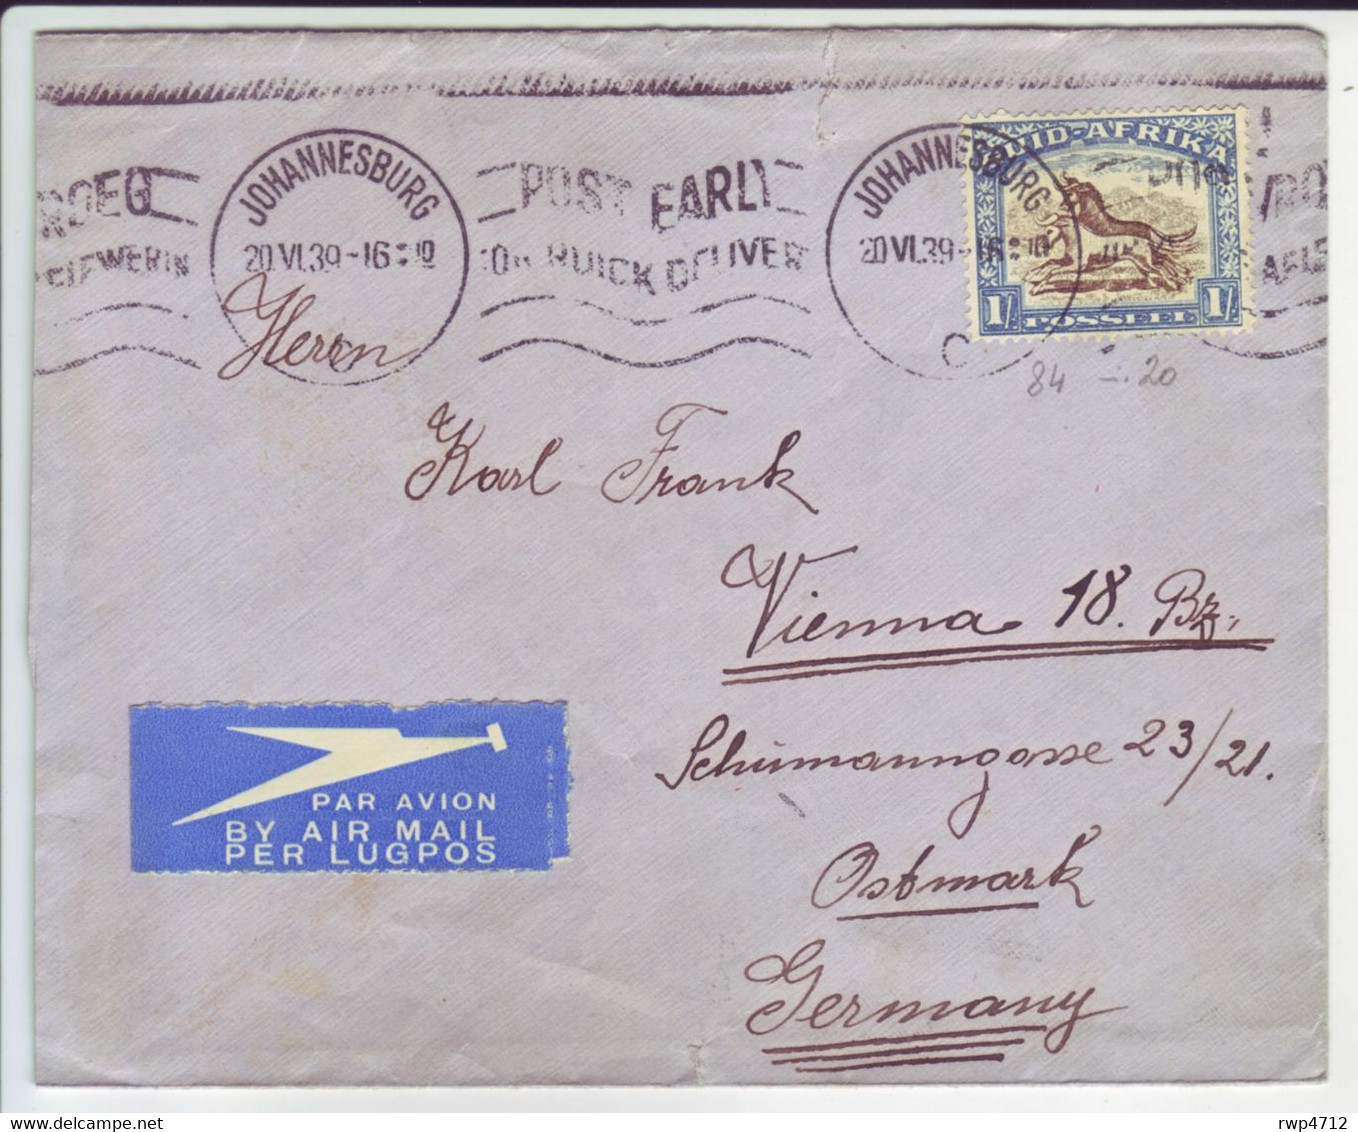 SOUTH AFRICA   Luftpostbrief  Airmail Cover Lettre Par Avion 1939 Via Athen To Austria - Airmail